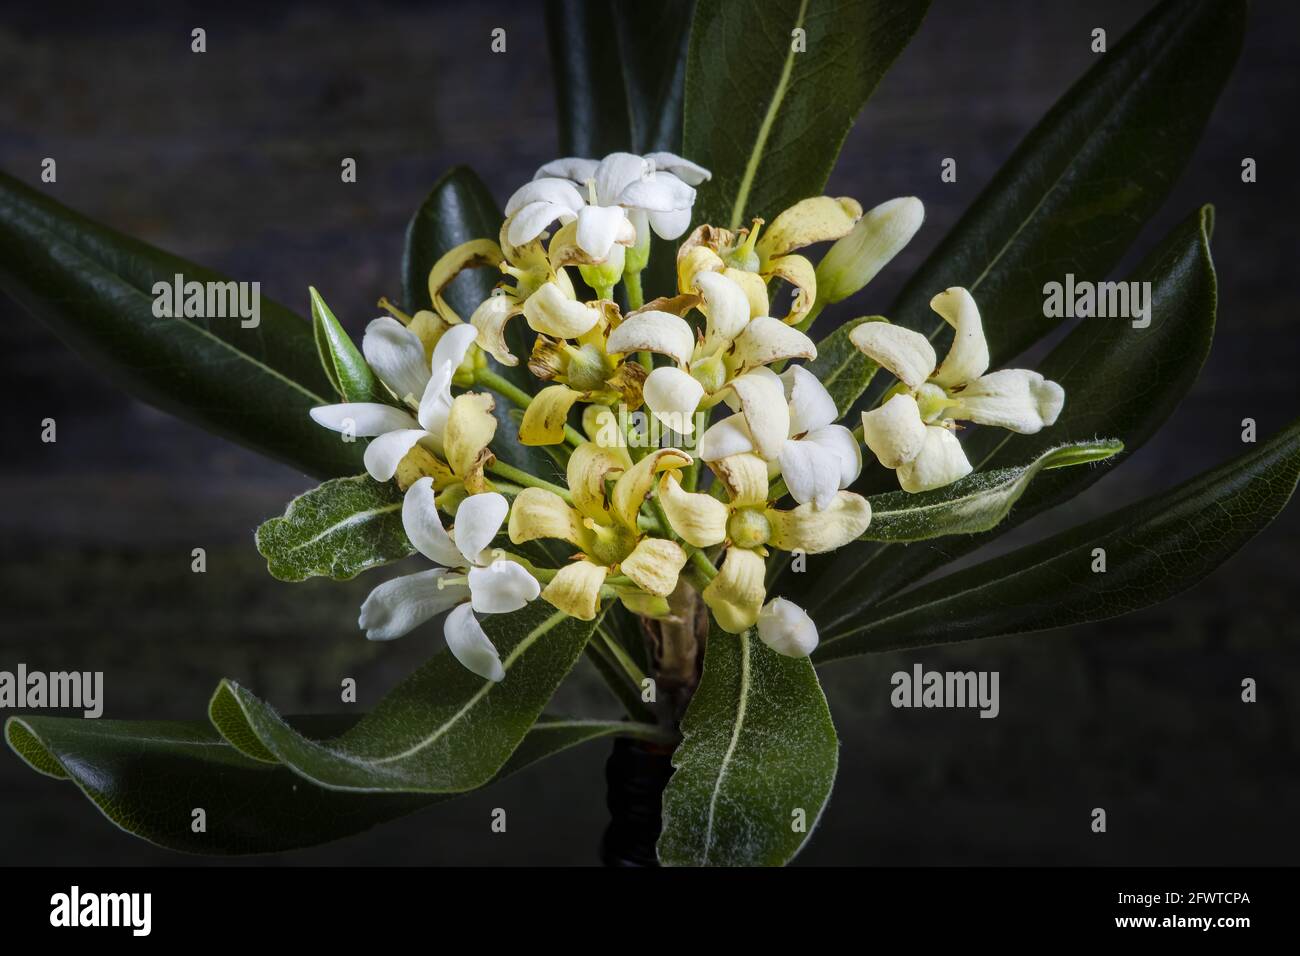 Australian Laurel Flower Studio Macro Photo. Spotlighted on Dark Background. Stock Photo